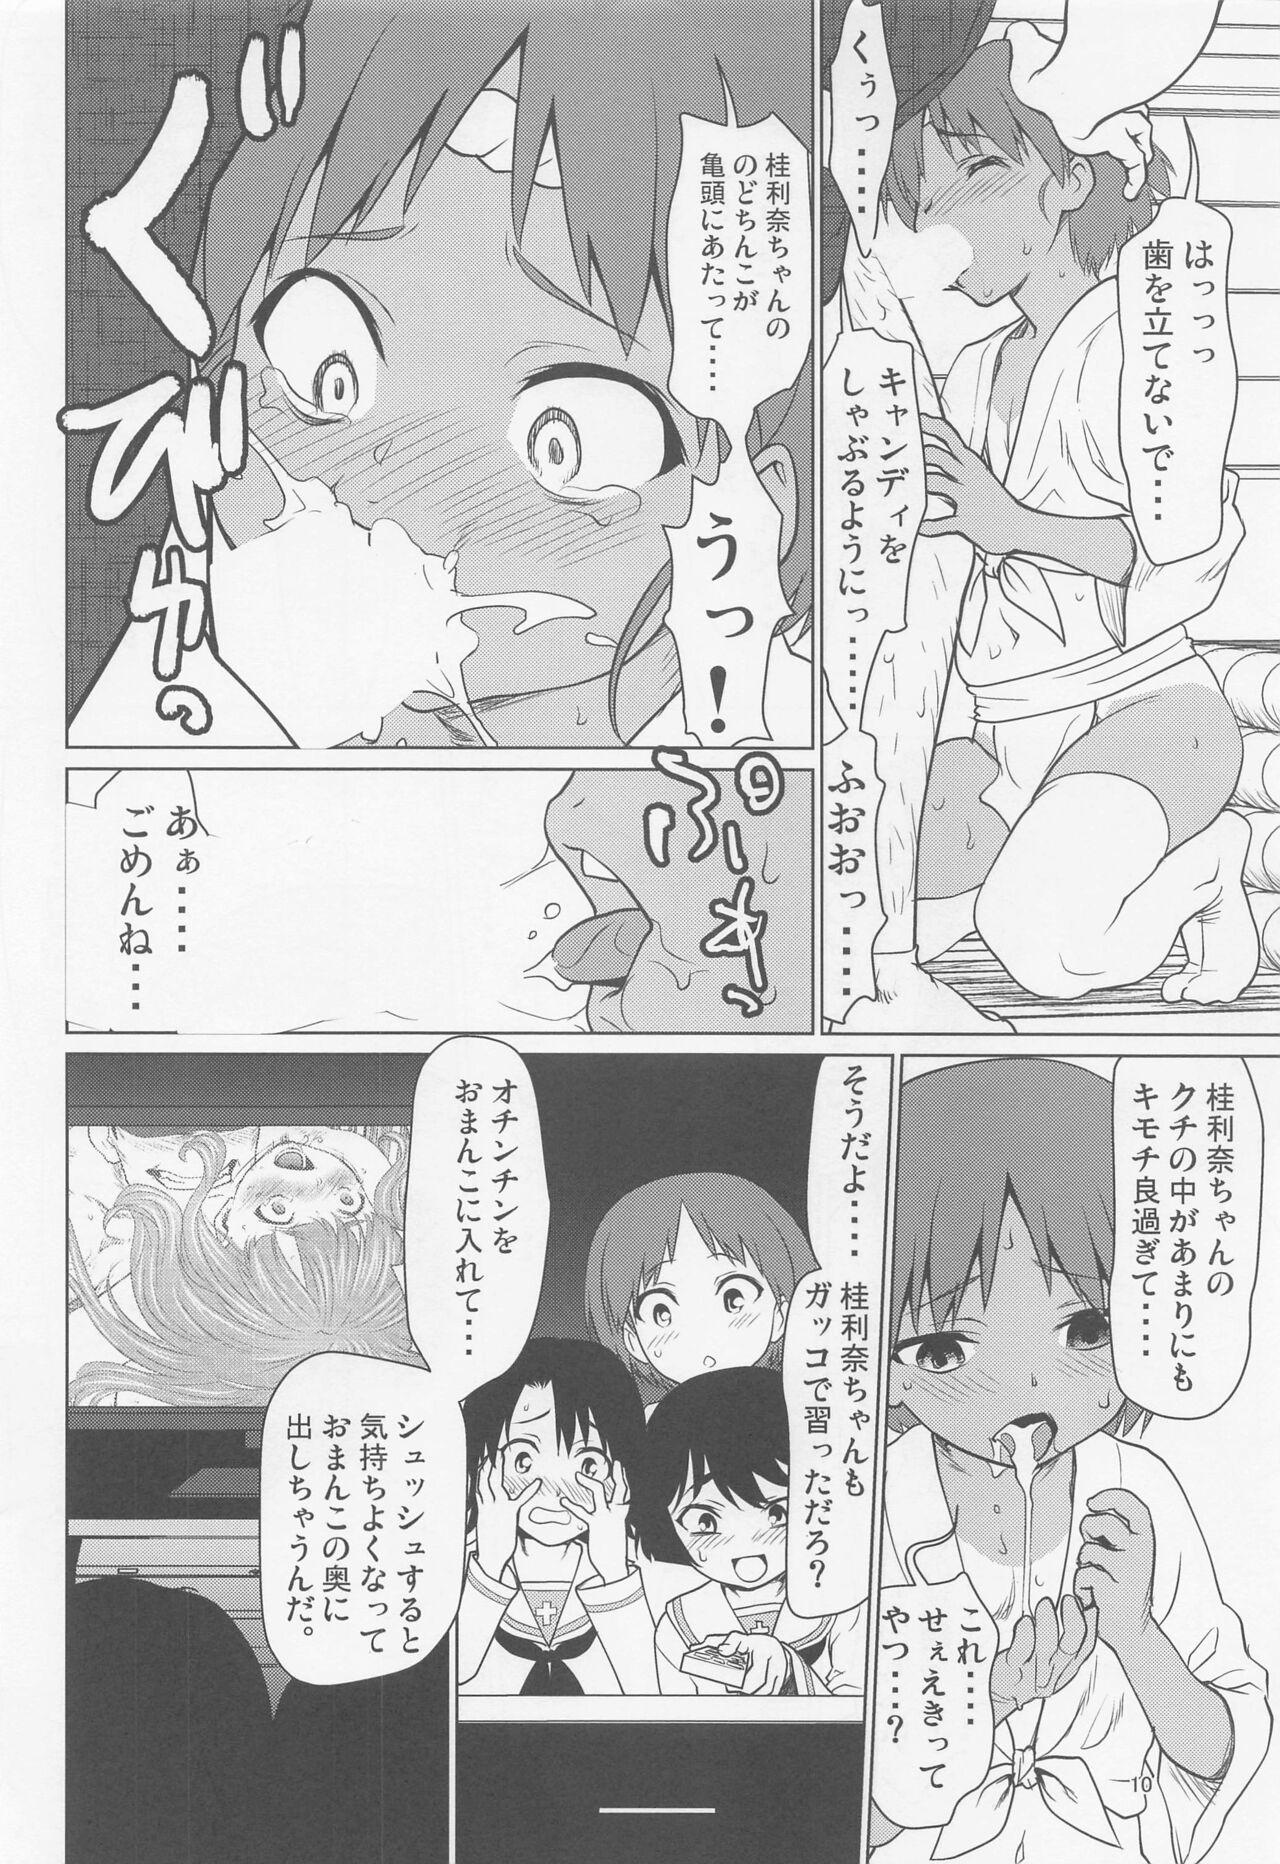 Studs hiyakefundoshinokarinachantomonokagede・・・・ Madura - Page 9